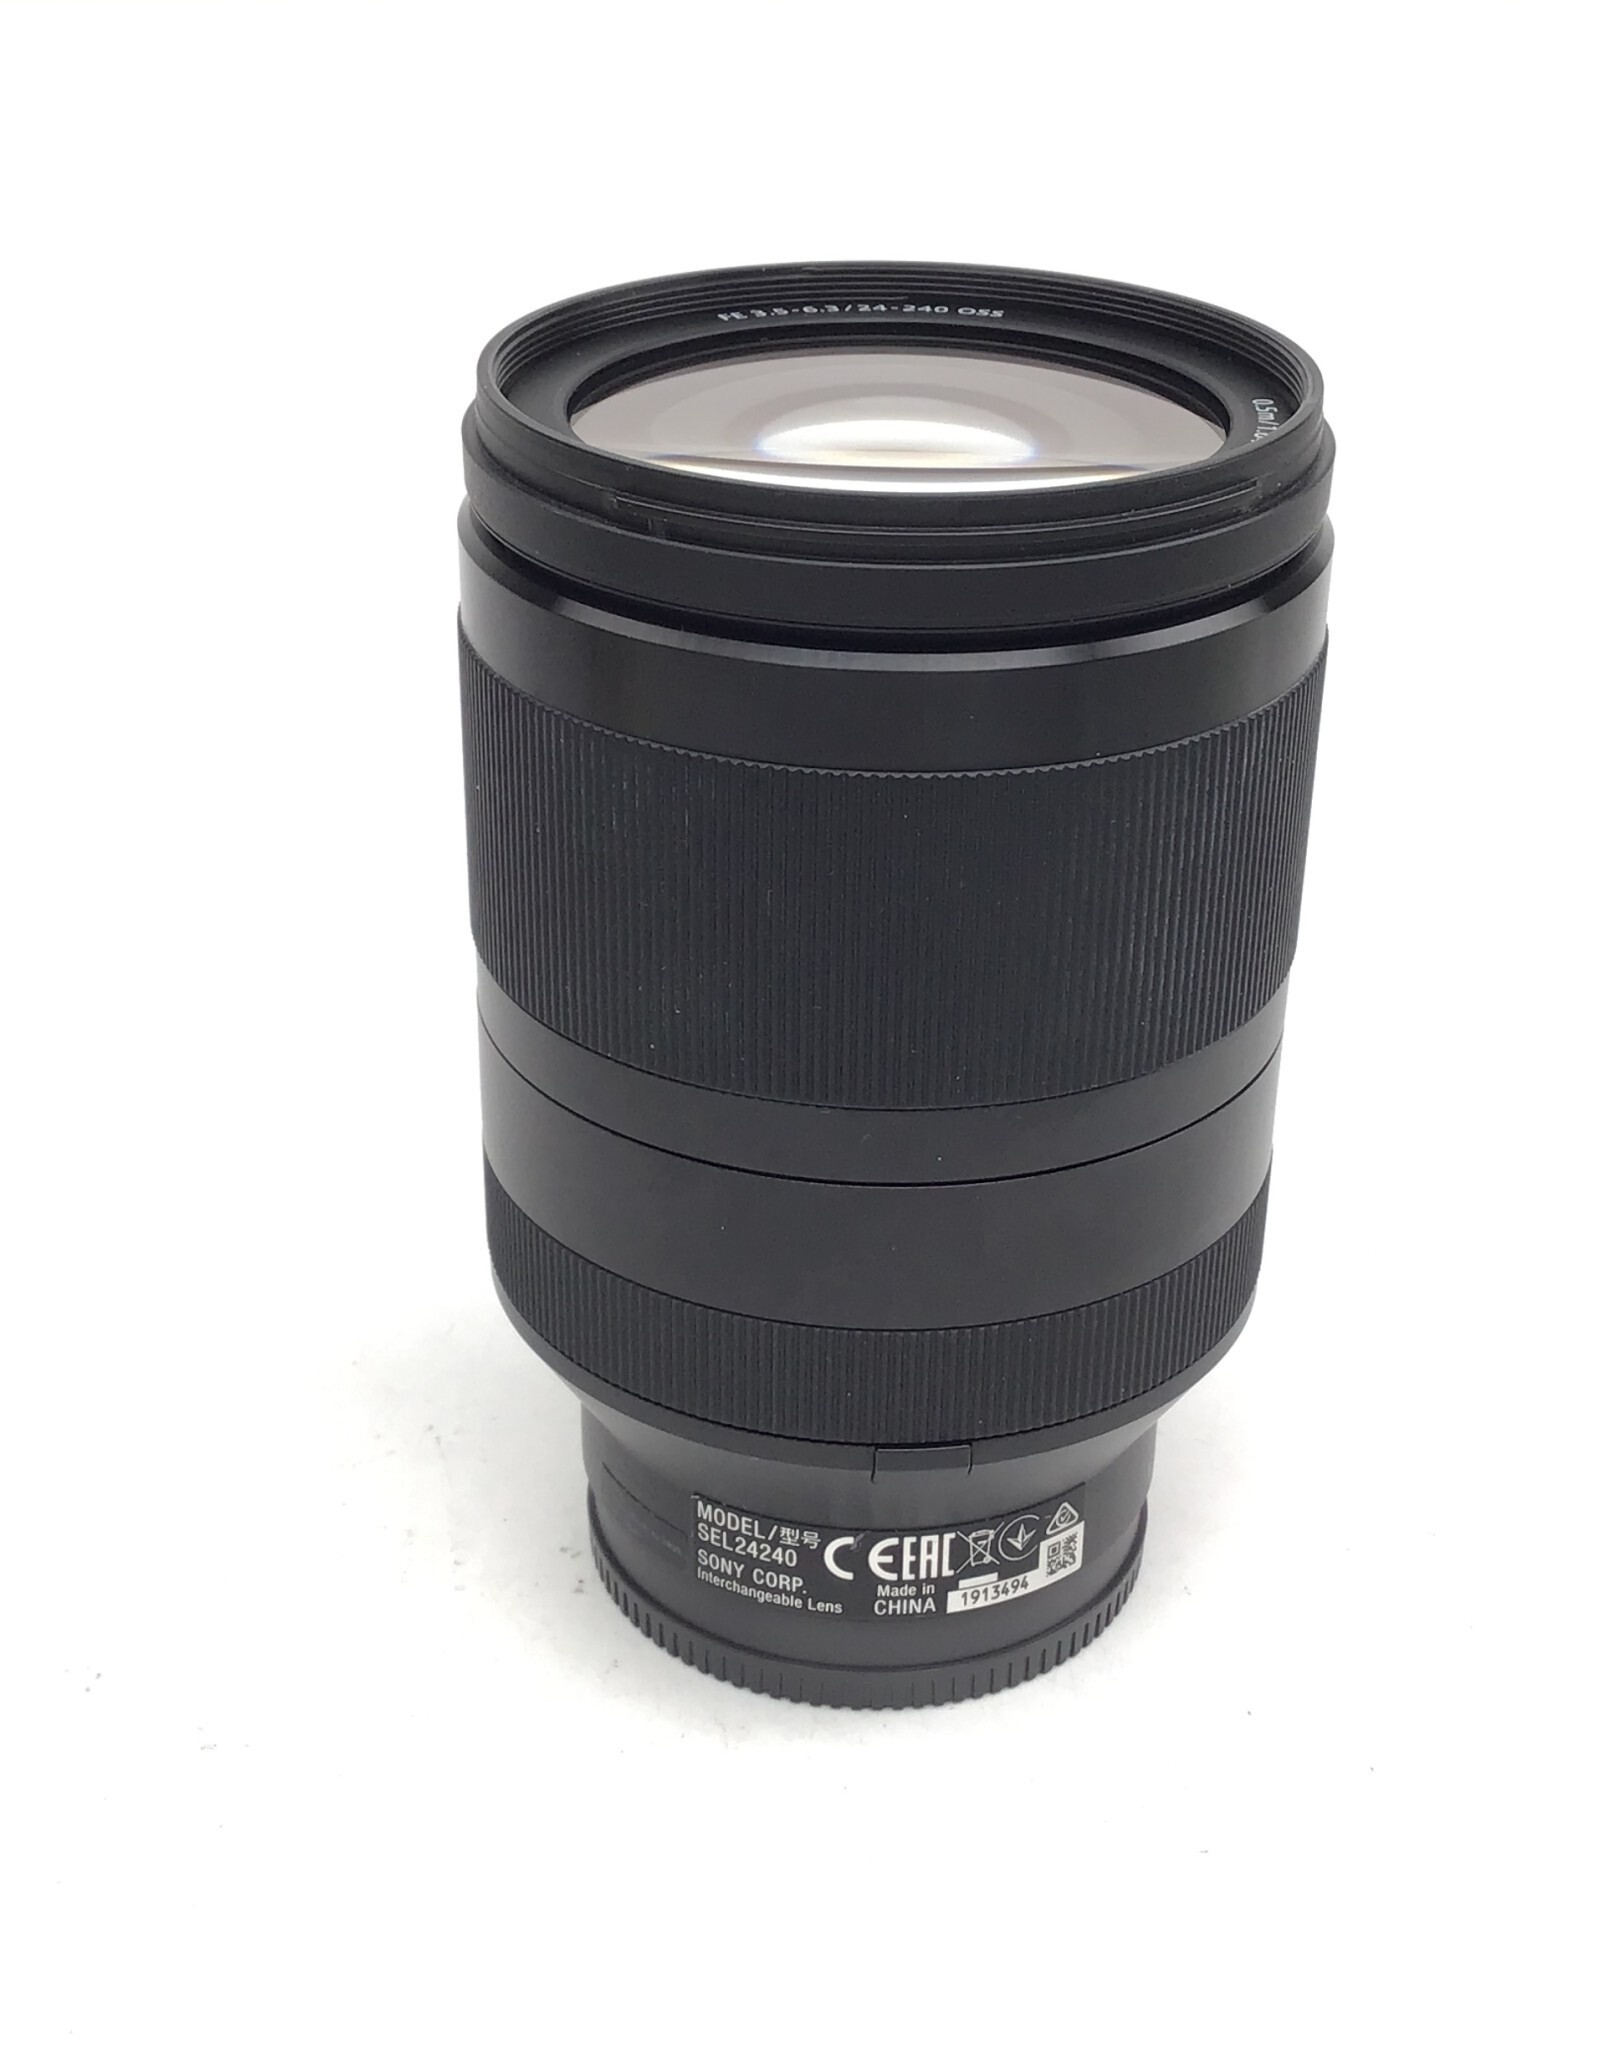 SONY Sony 24-240mm f3.5-6.3 OSS FE Lens Used Good